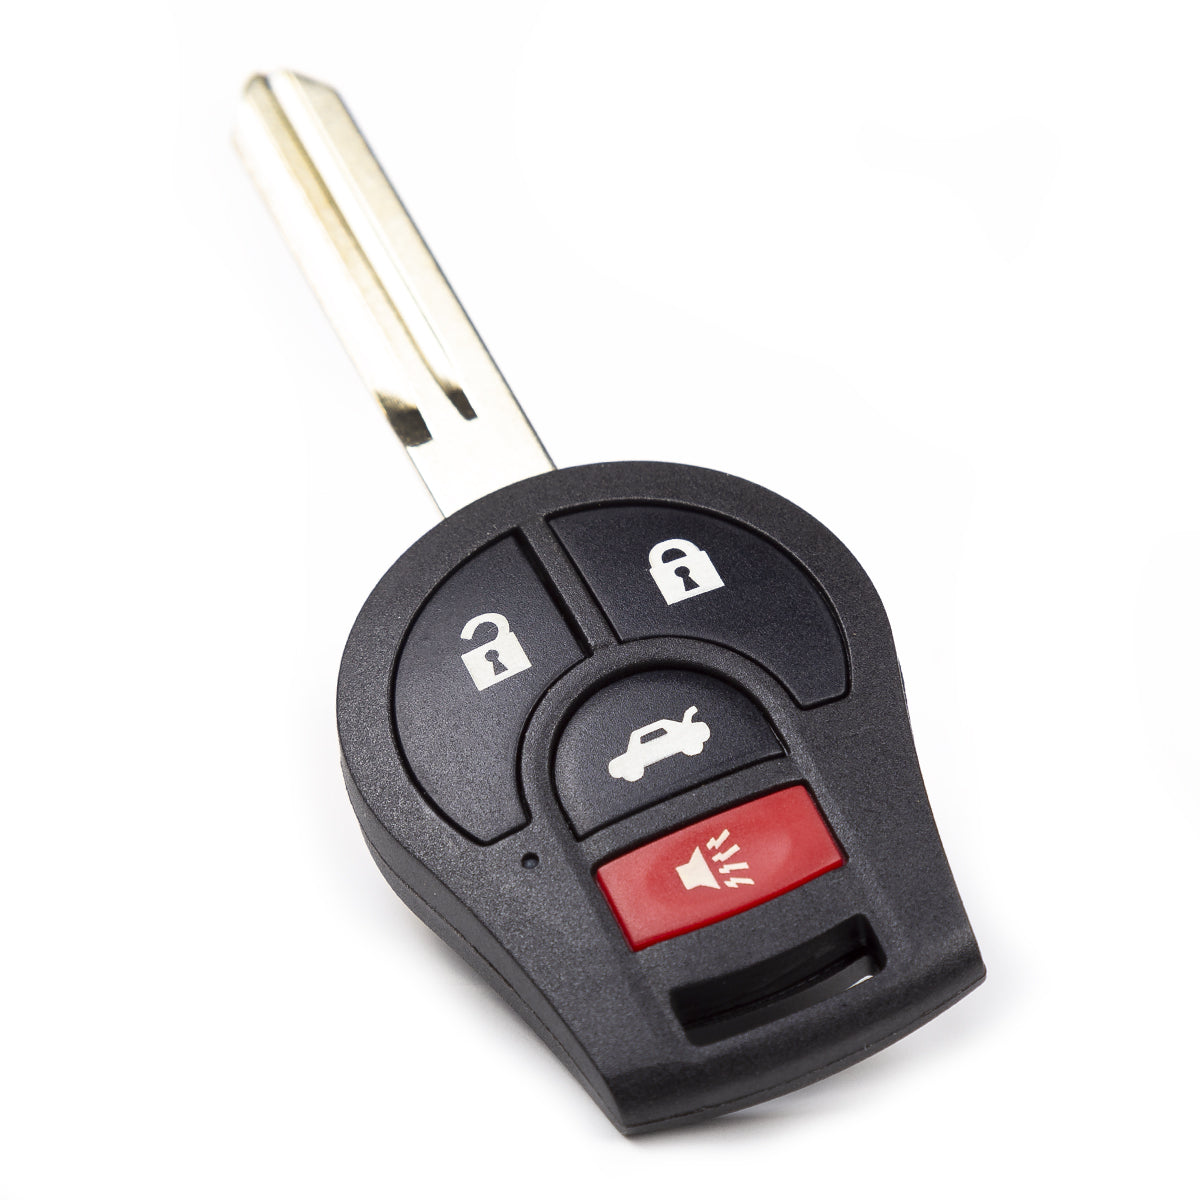 2005 Nissan Armada Key Fob - Aftermarket - 4 Buttons Fob FCC# CWTWB1U751 - ID46 Chip